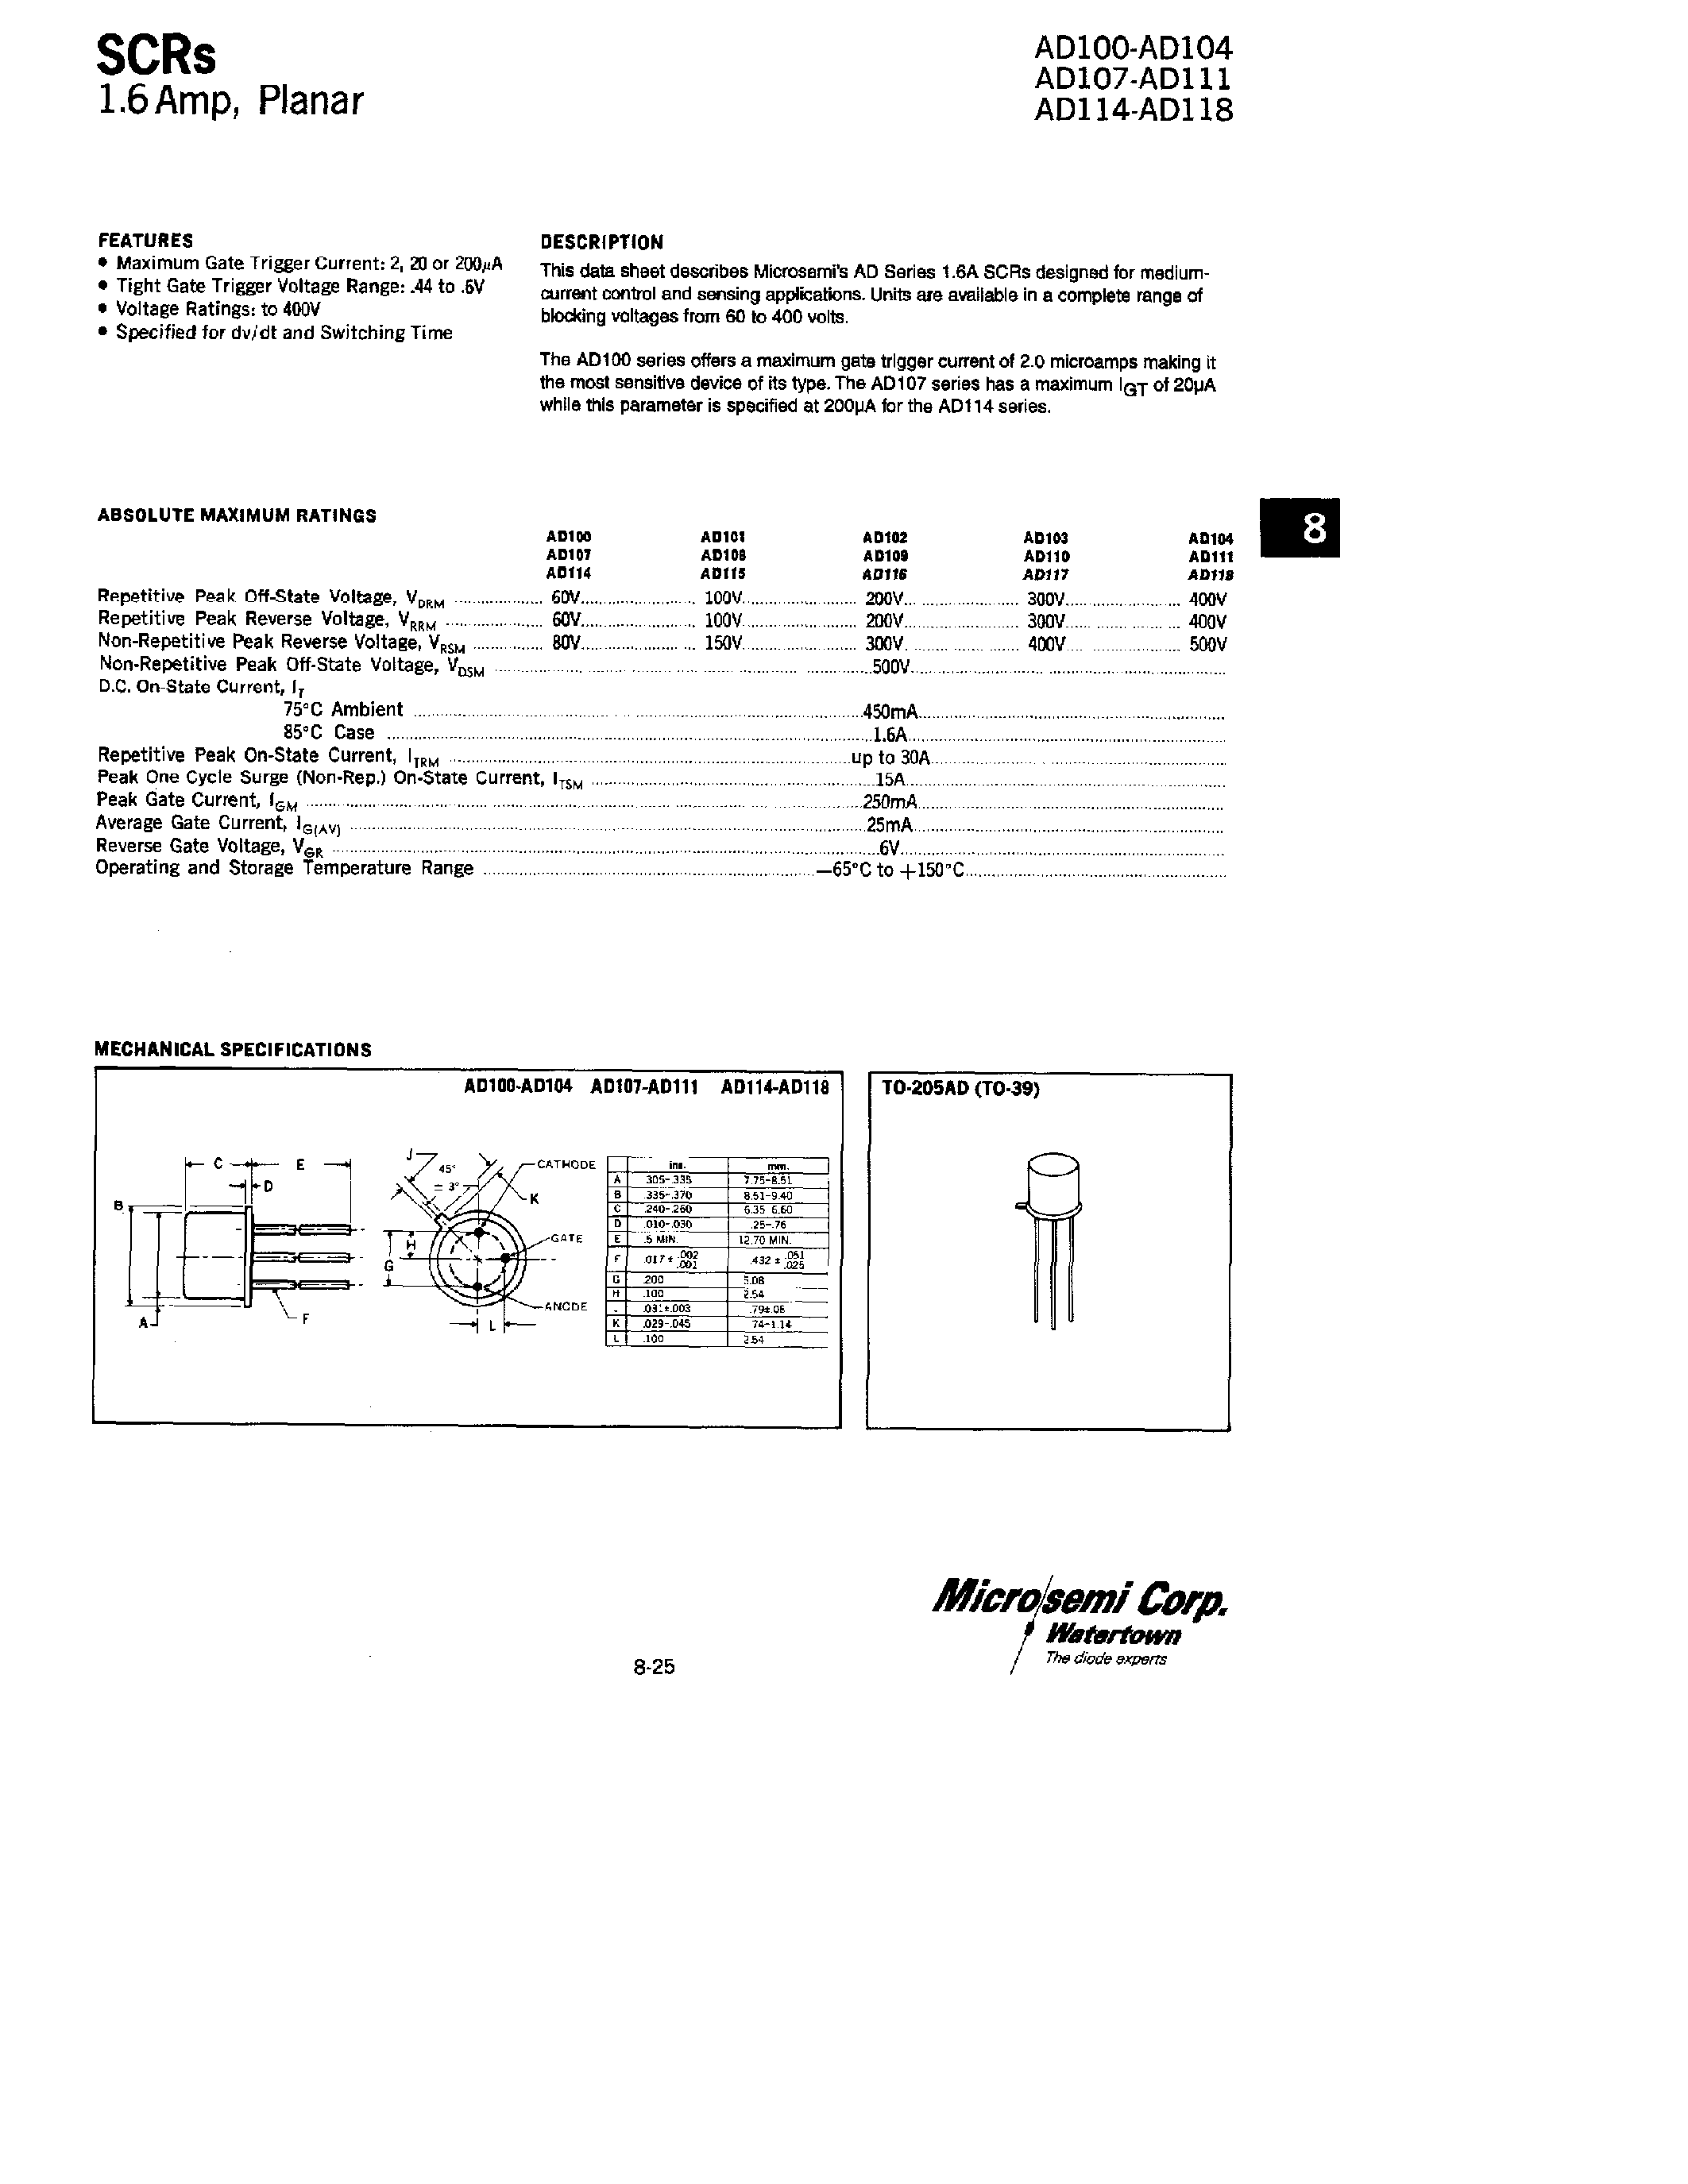 Datasheet AD118 - SCRs 1.5 Amp/ Planar page 1